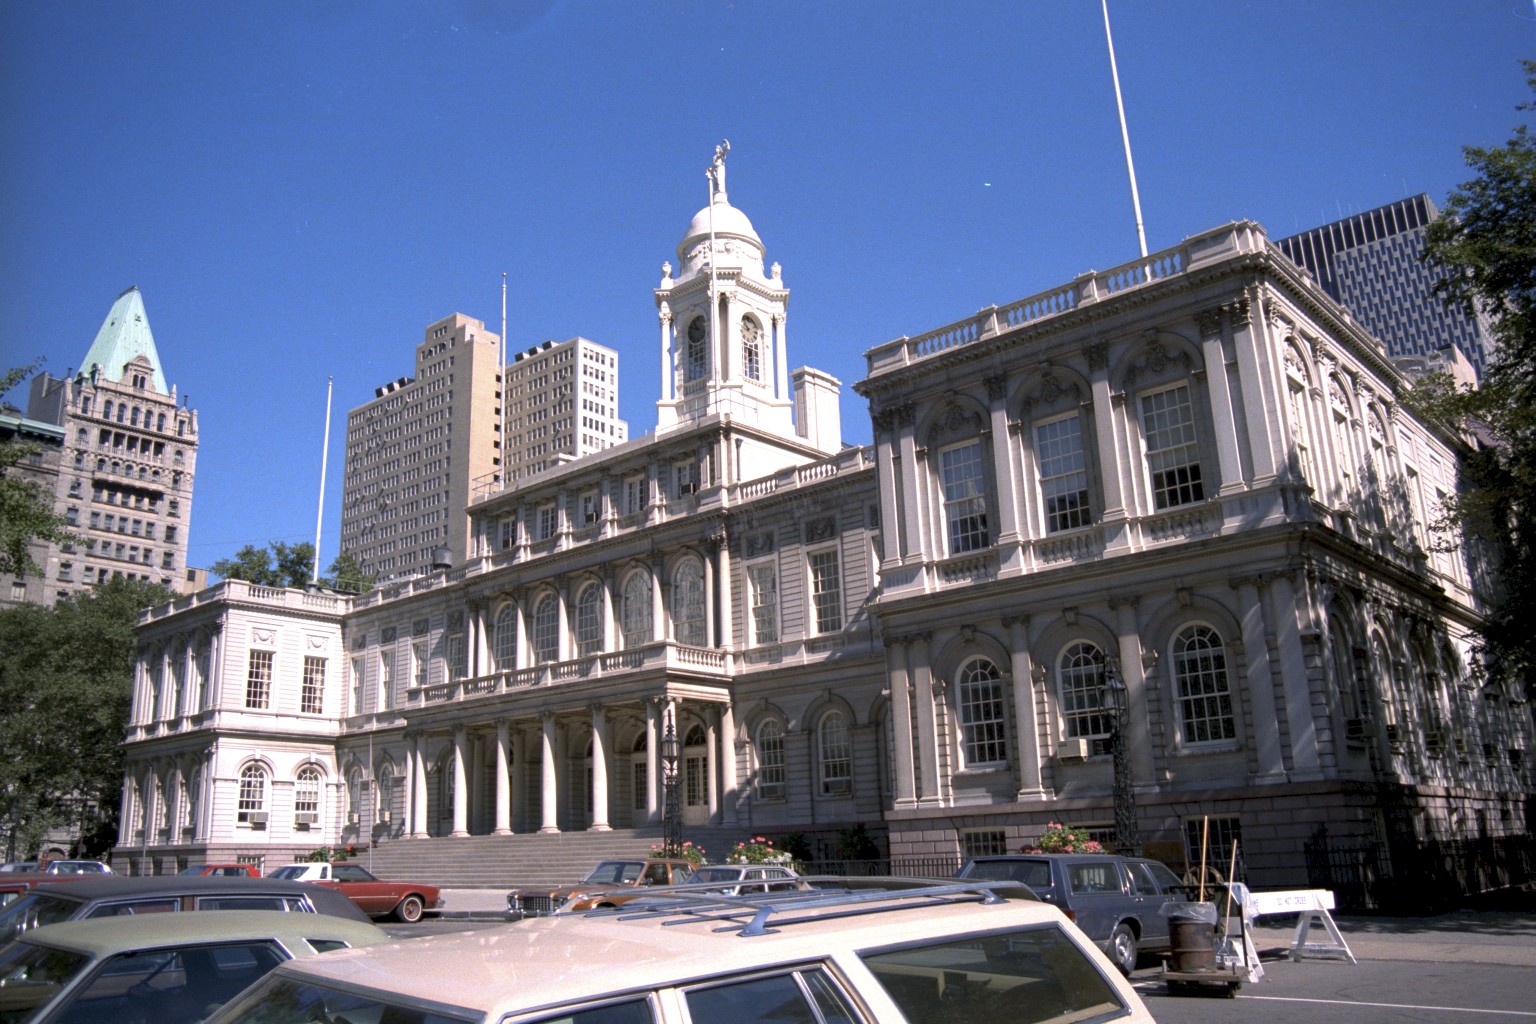 City Hall, New York